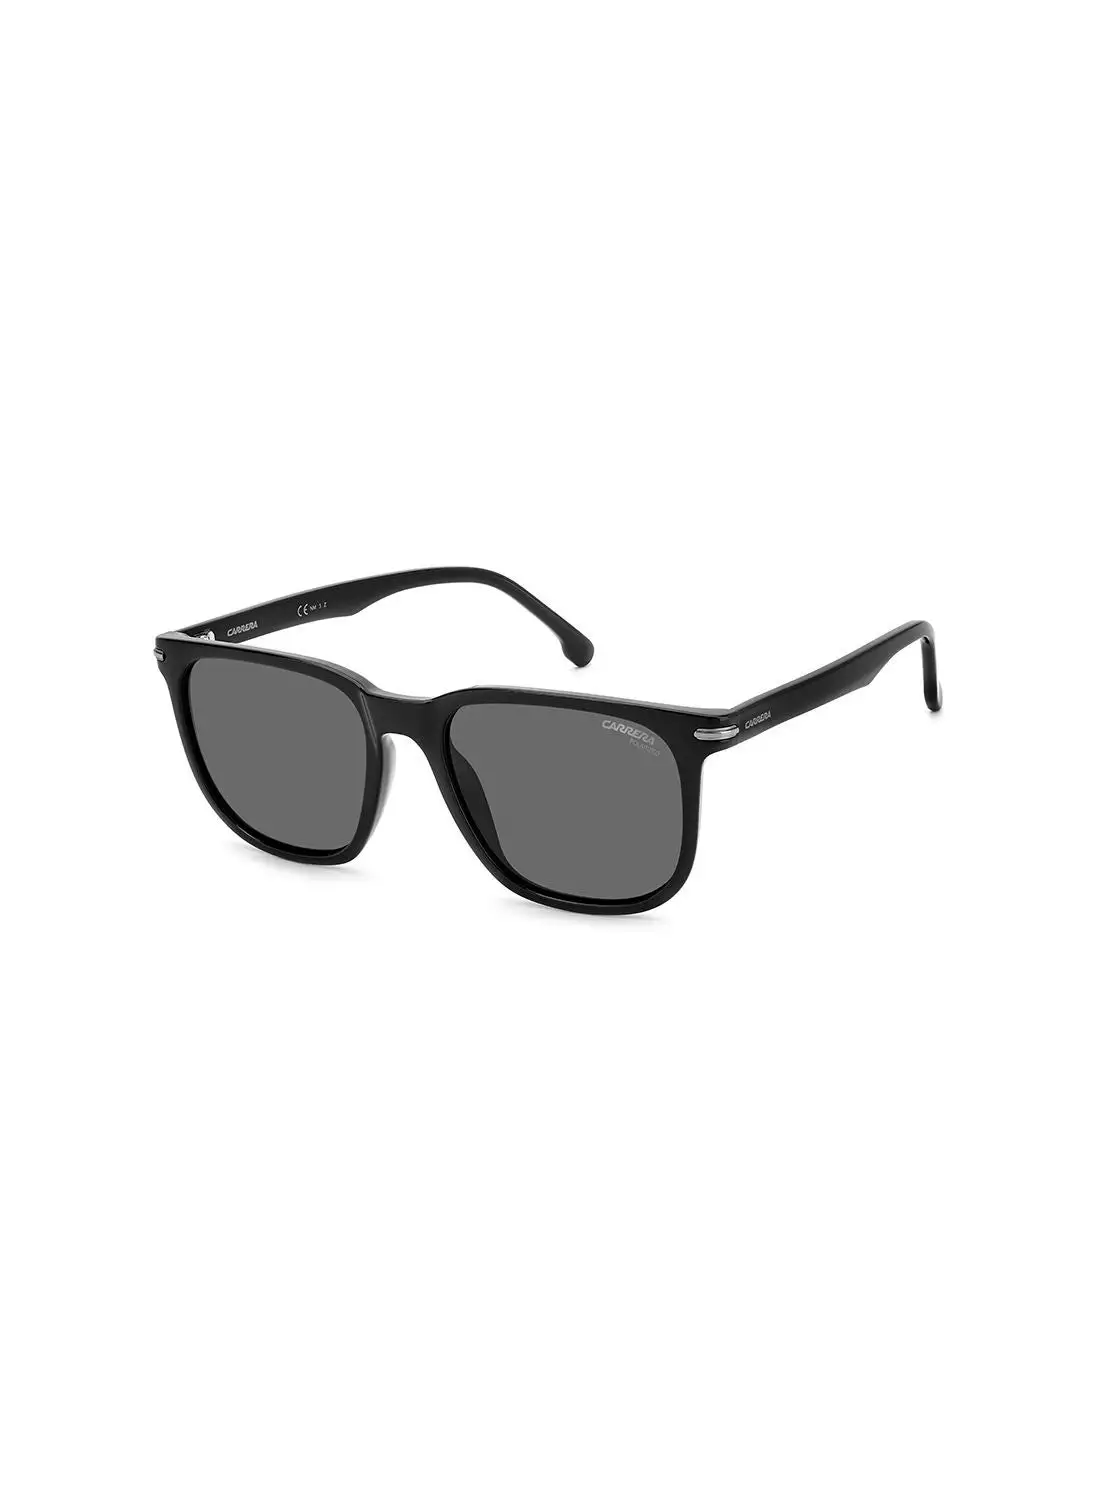 Carrera Unisex UV Protection Square Sunglasses - Carrera 300/S Black/Grey 54 - Lens Size: 54 Mm